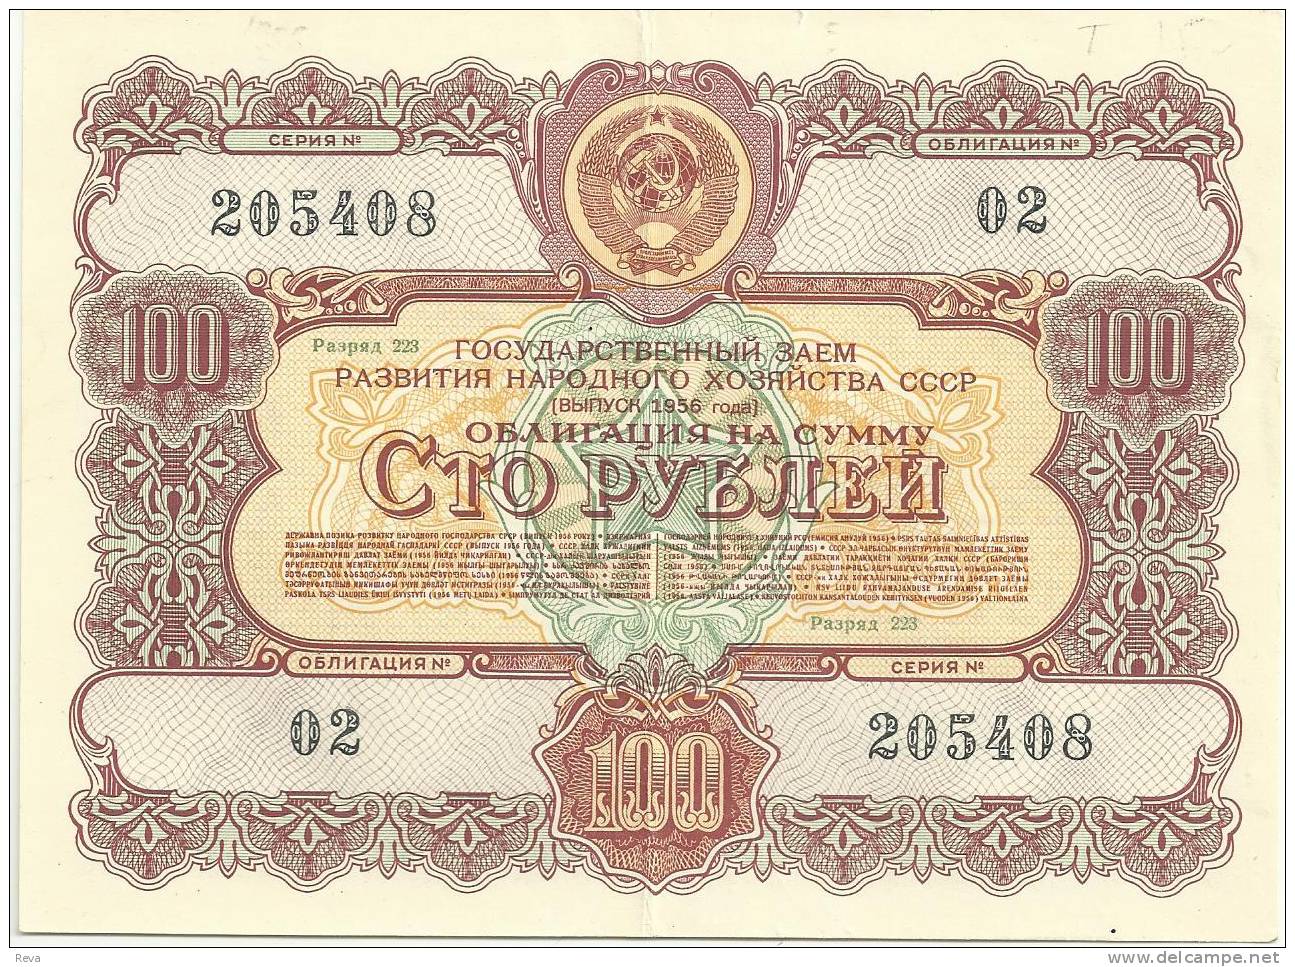 RUSSIA 100 RUBLEI PURPLE USSR EMBLEM FRONT INSCIPTIONS BACK TREASURY NOTE DATED 1956 P.S1687 VF READ DESCRIPTION !! - Rusia